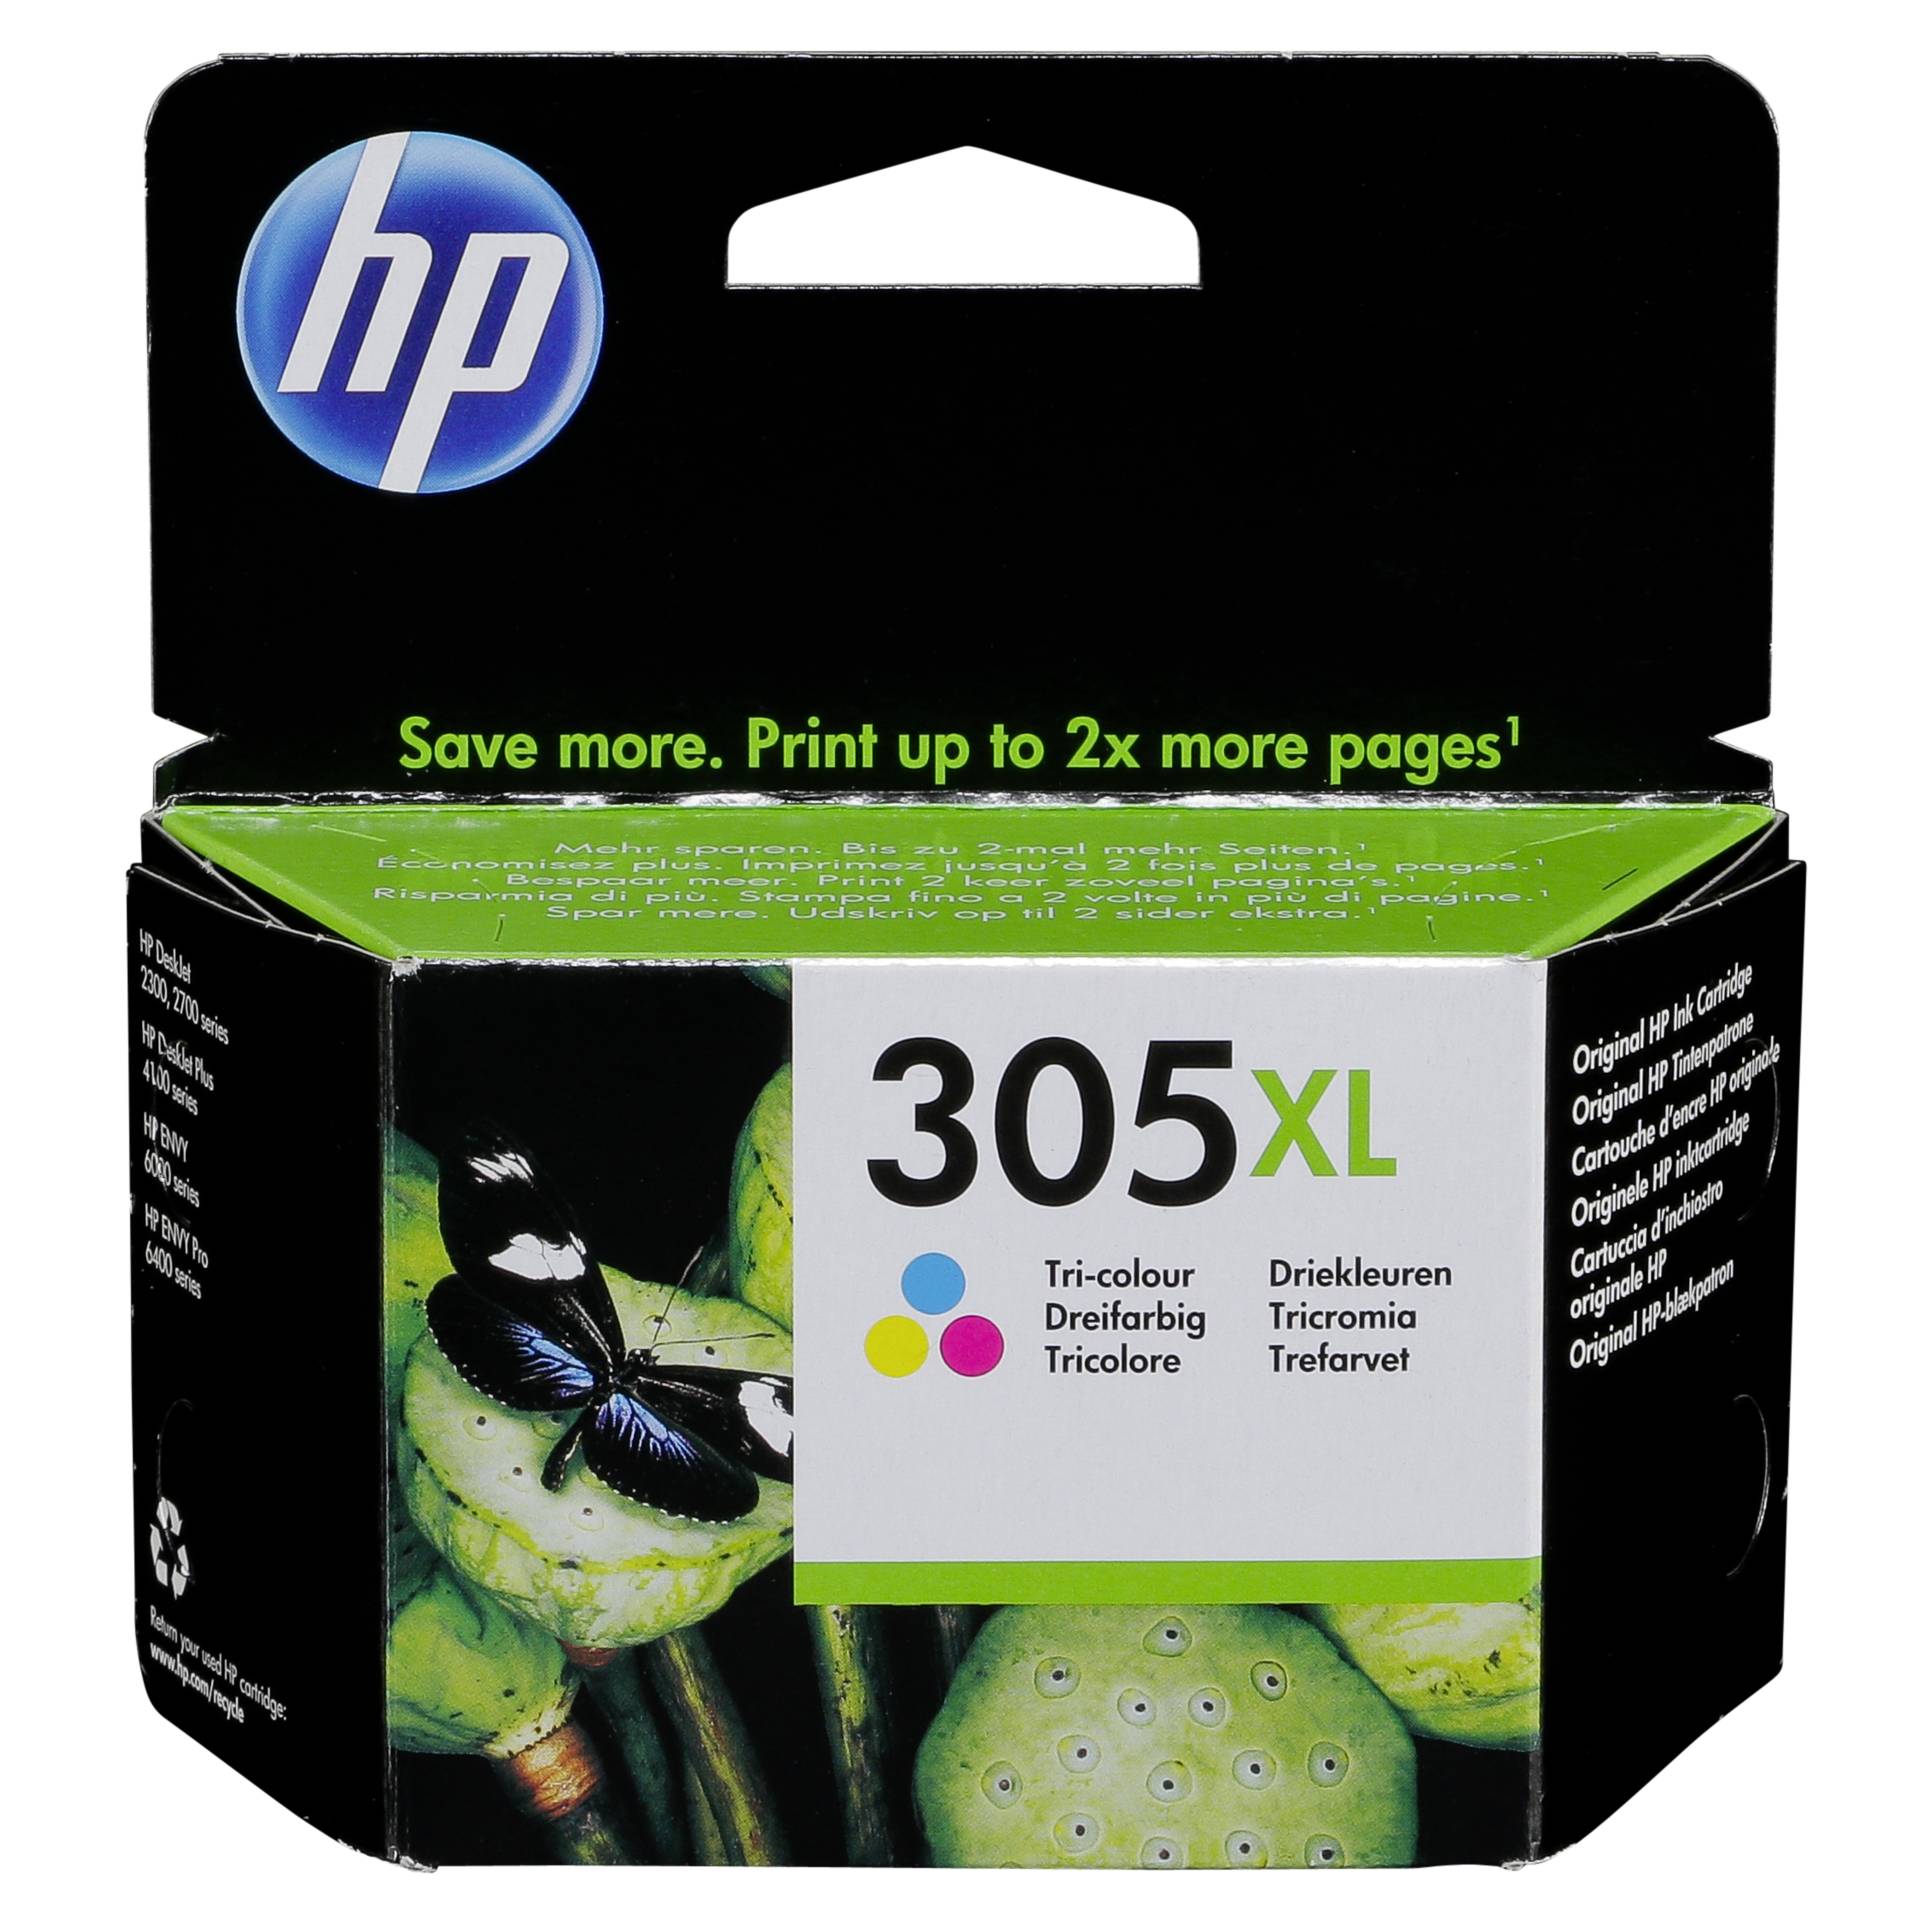 HP Druckkopf mit Tinte 305 XL farbig 